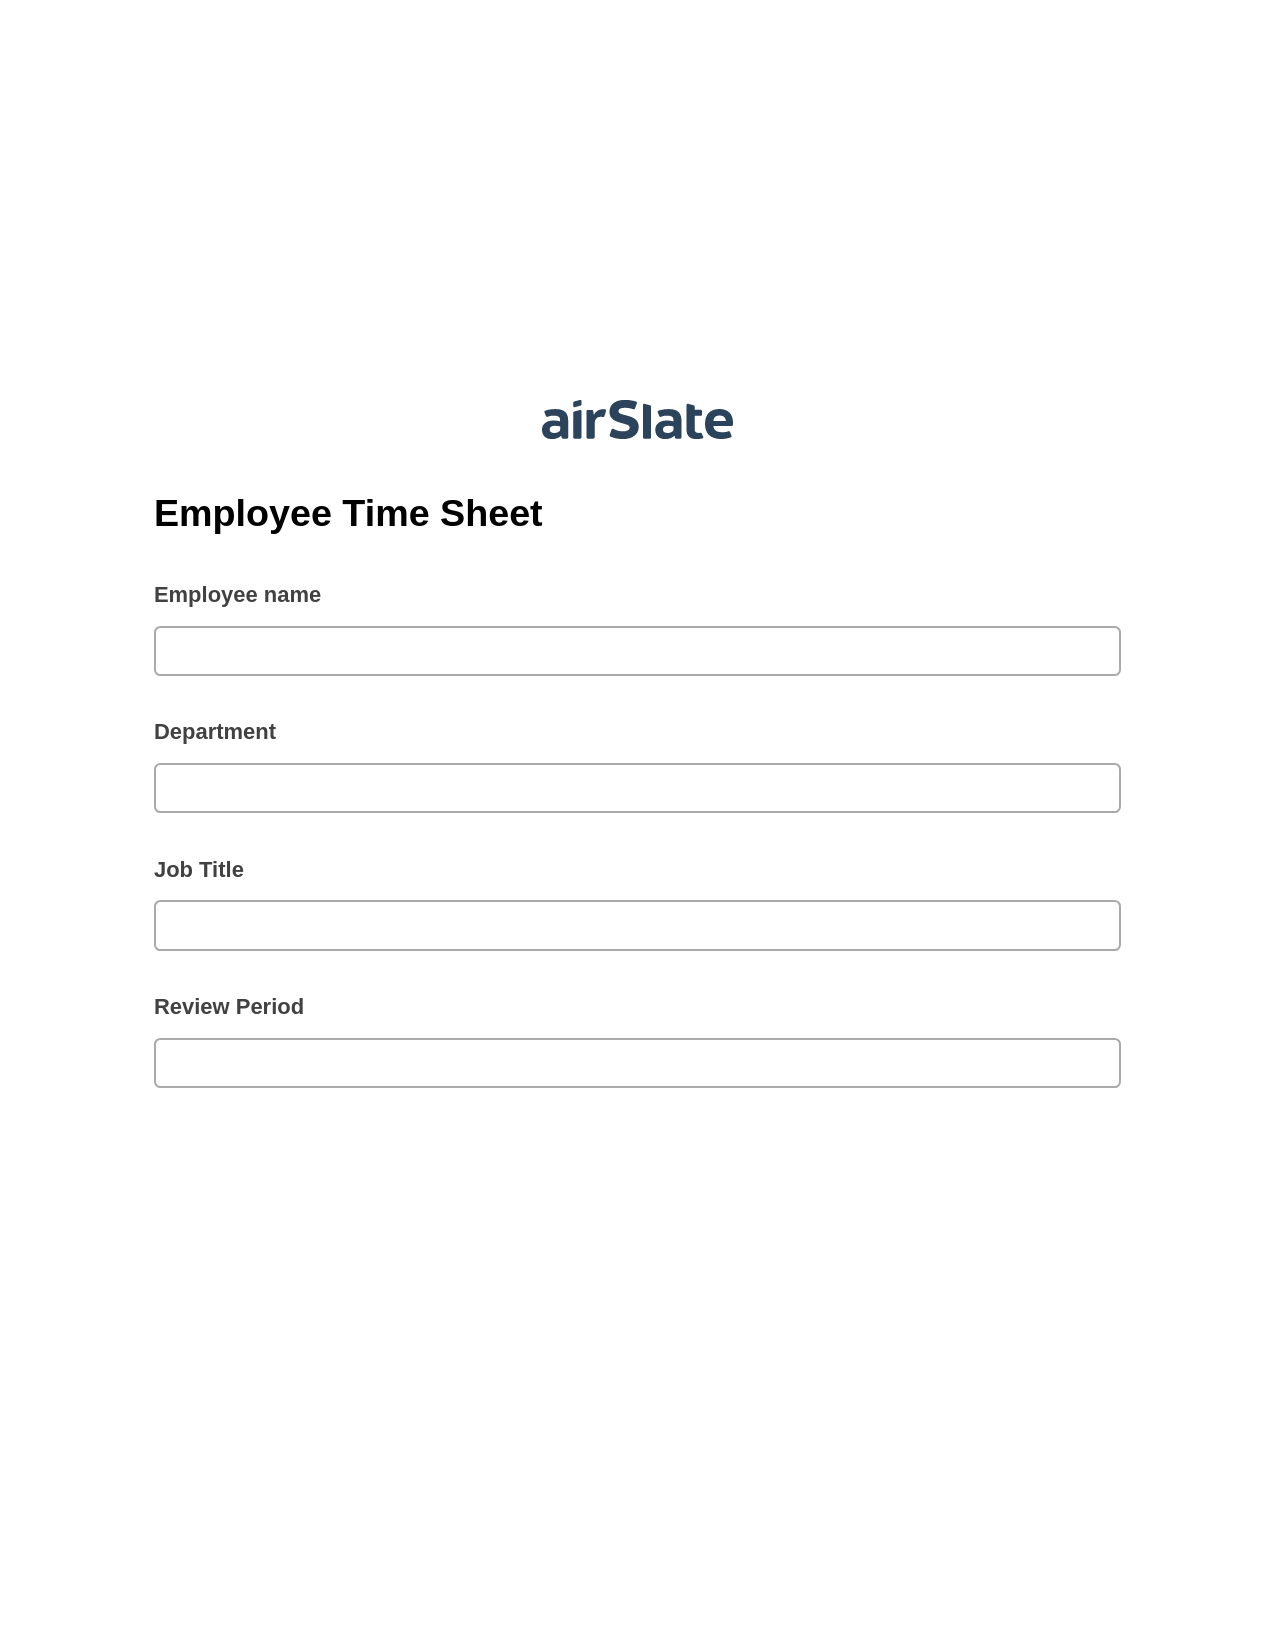 Multirole Employee Time Sheet Pre-fill from MySQL Bot, Create slate addon, Archive to Dropbox Bot